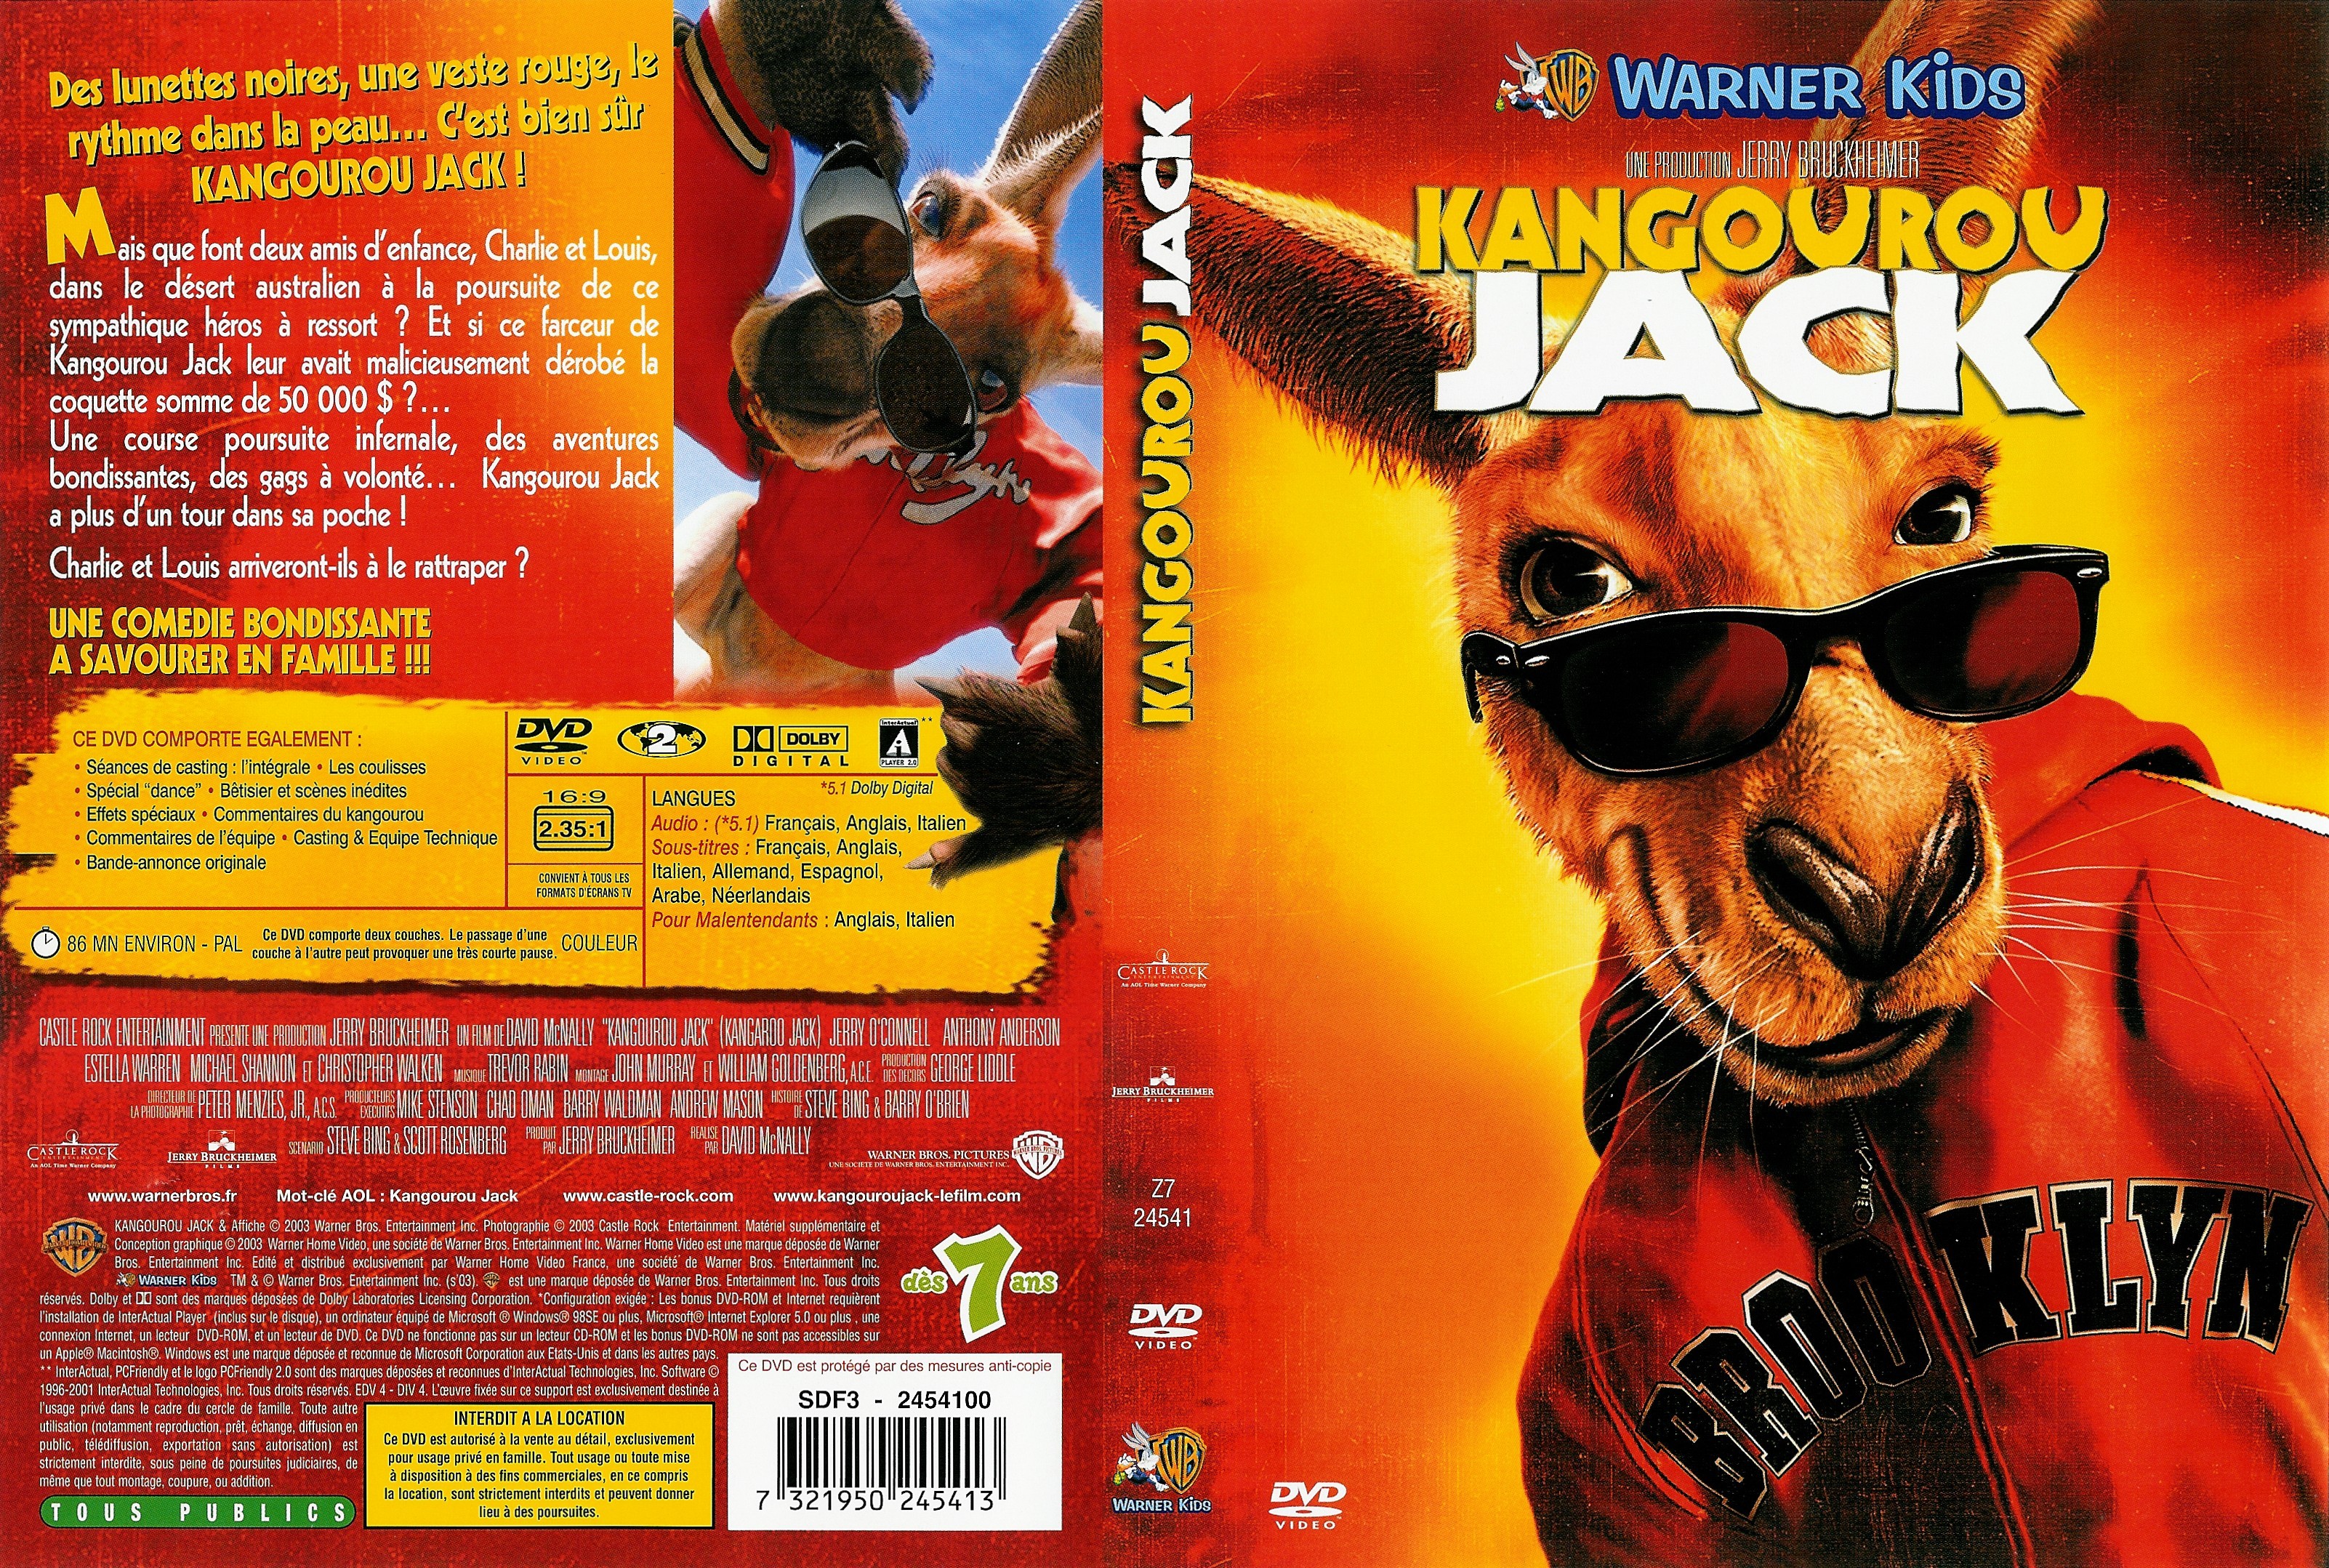 Jaquette DVD Kangourou jack